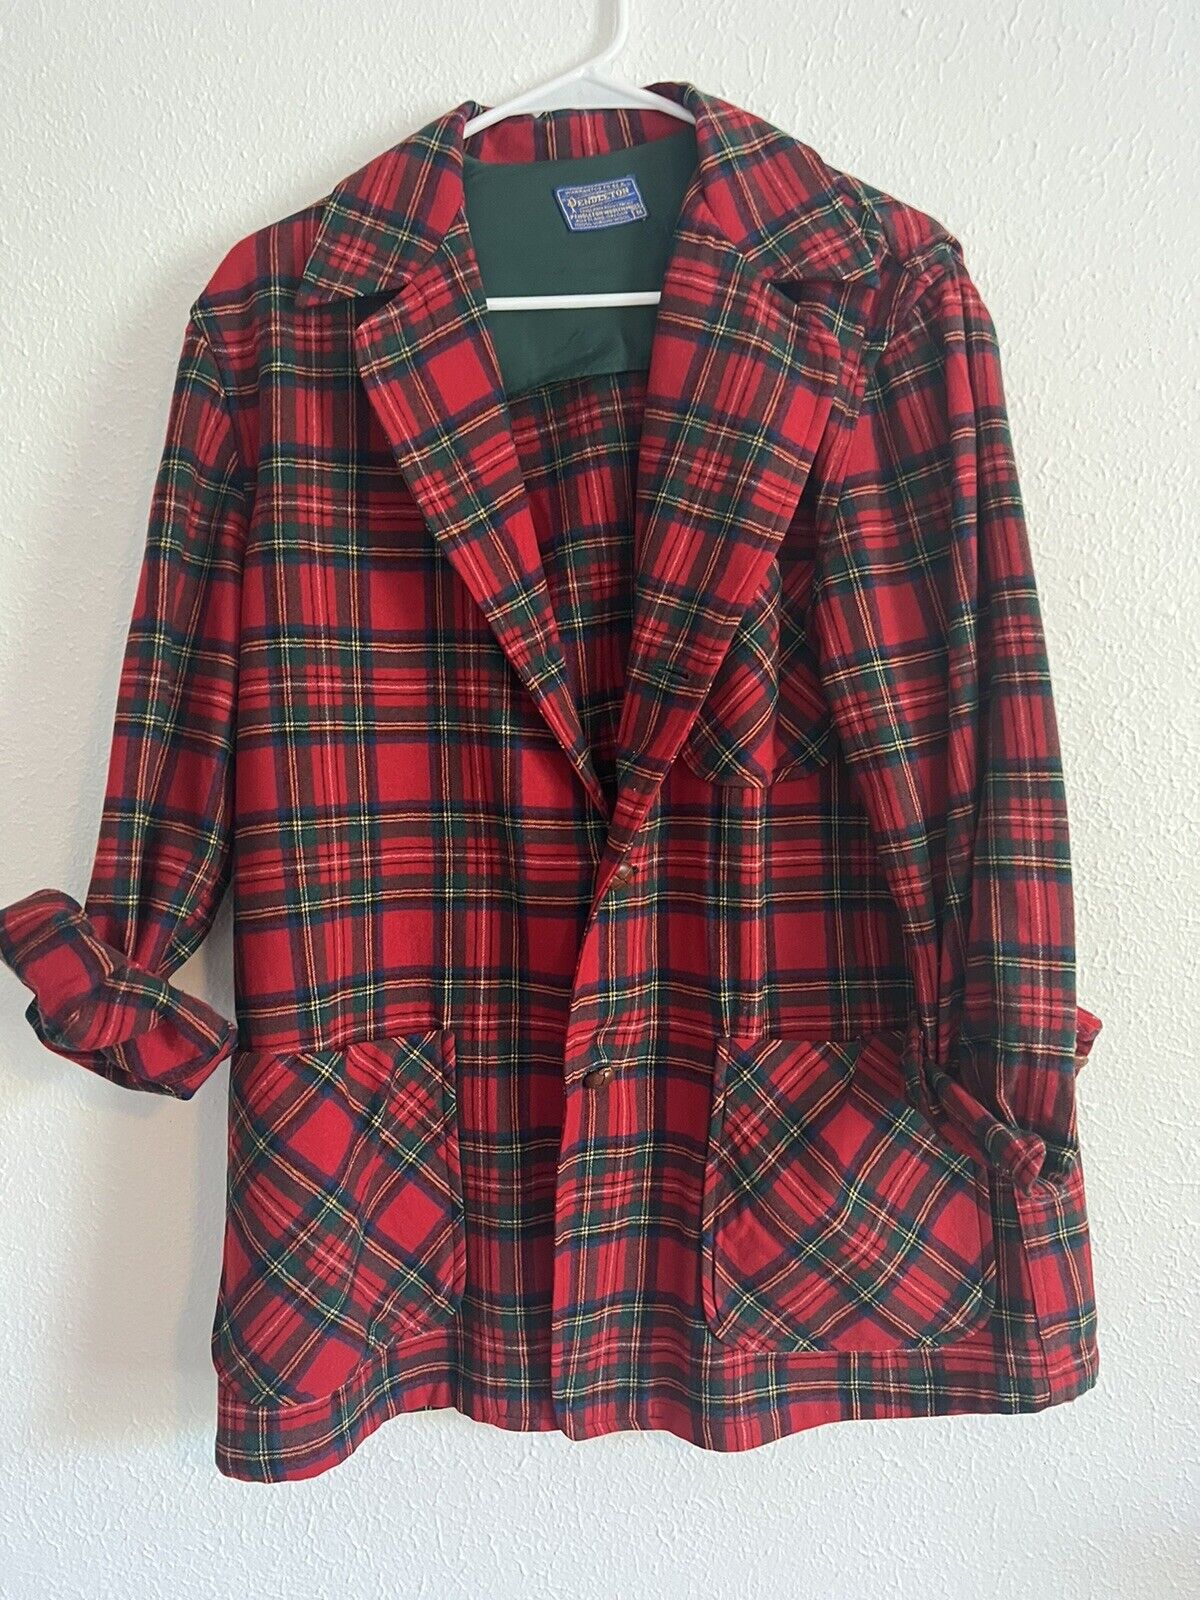 Vintage Pendleton Jacket-M - image 1